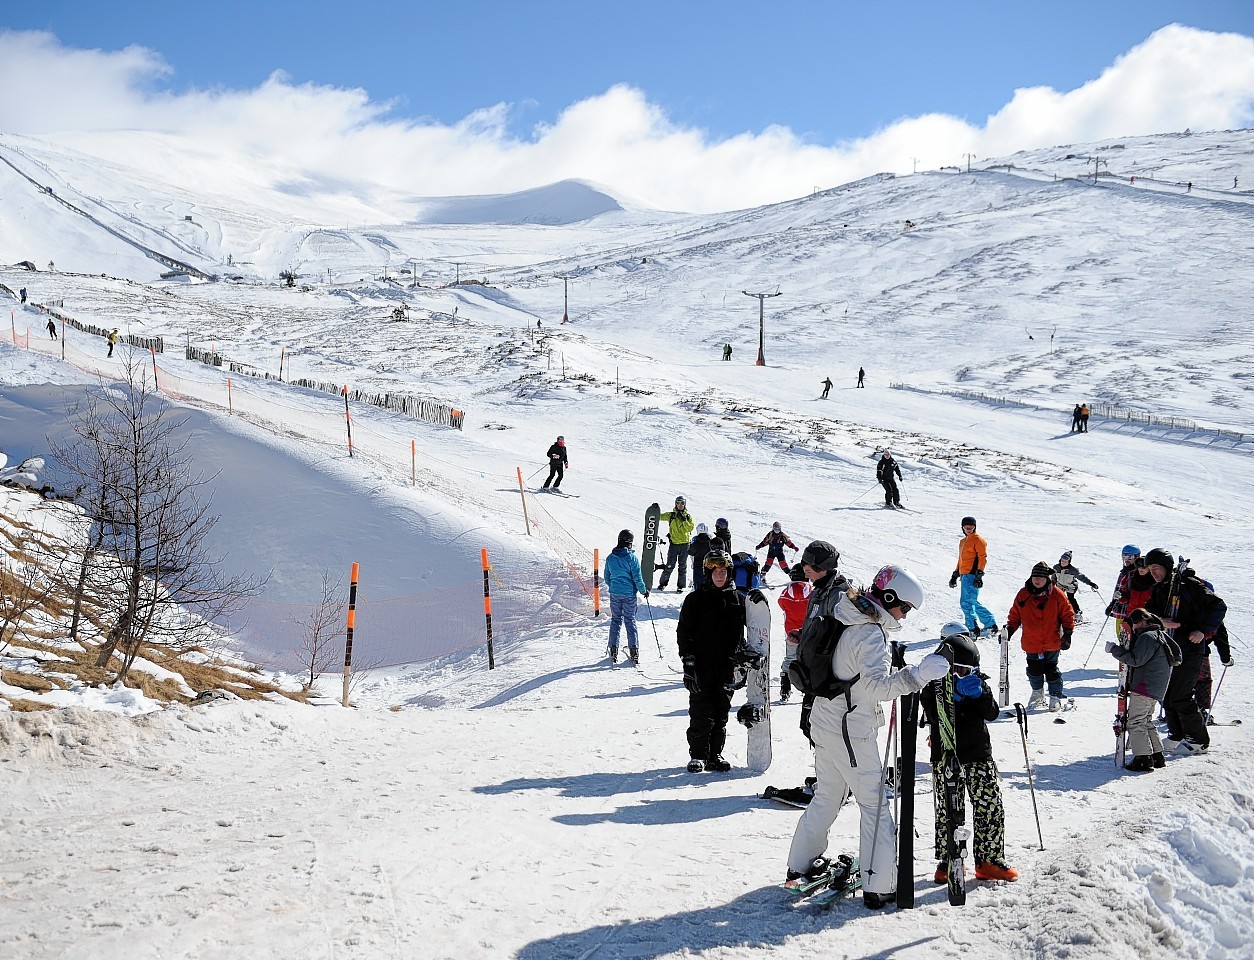 Cairngorms snowsports on the decrease despite heavy snow fall